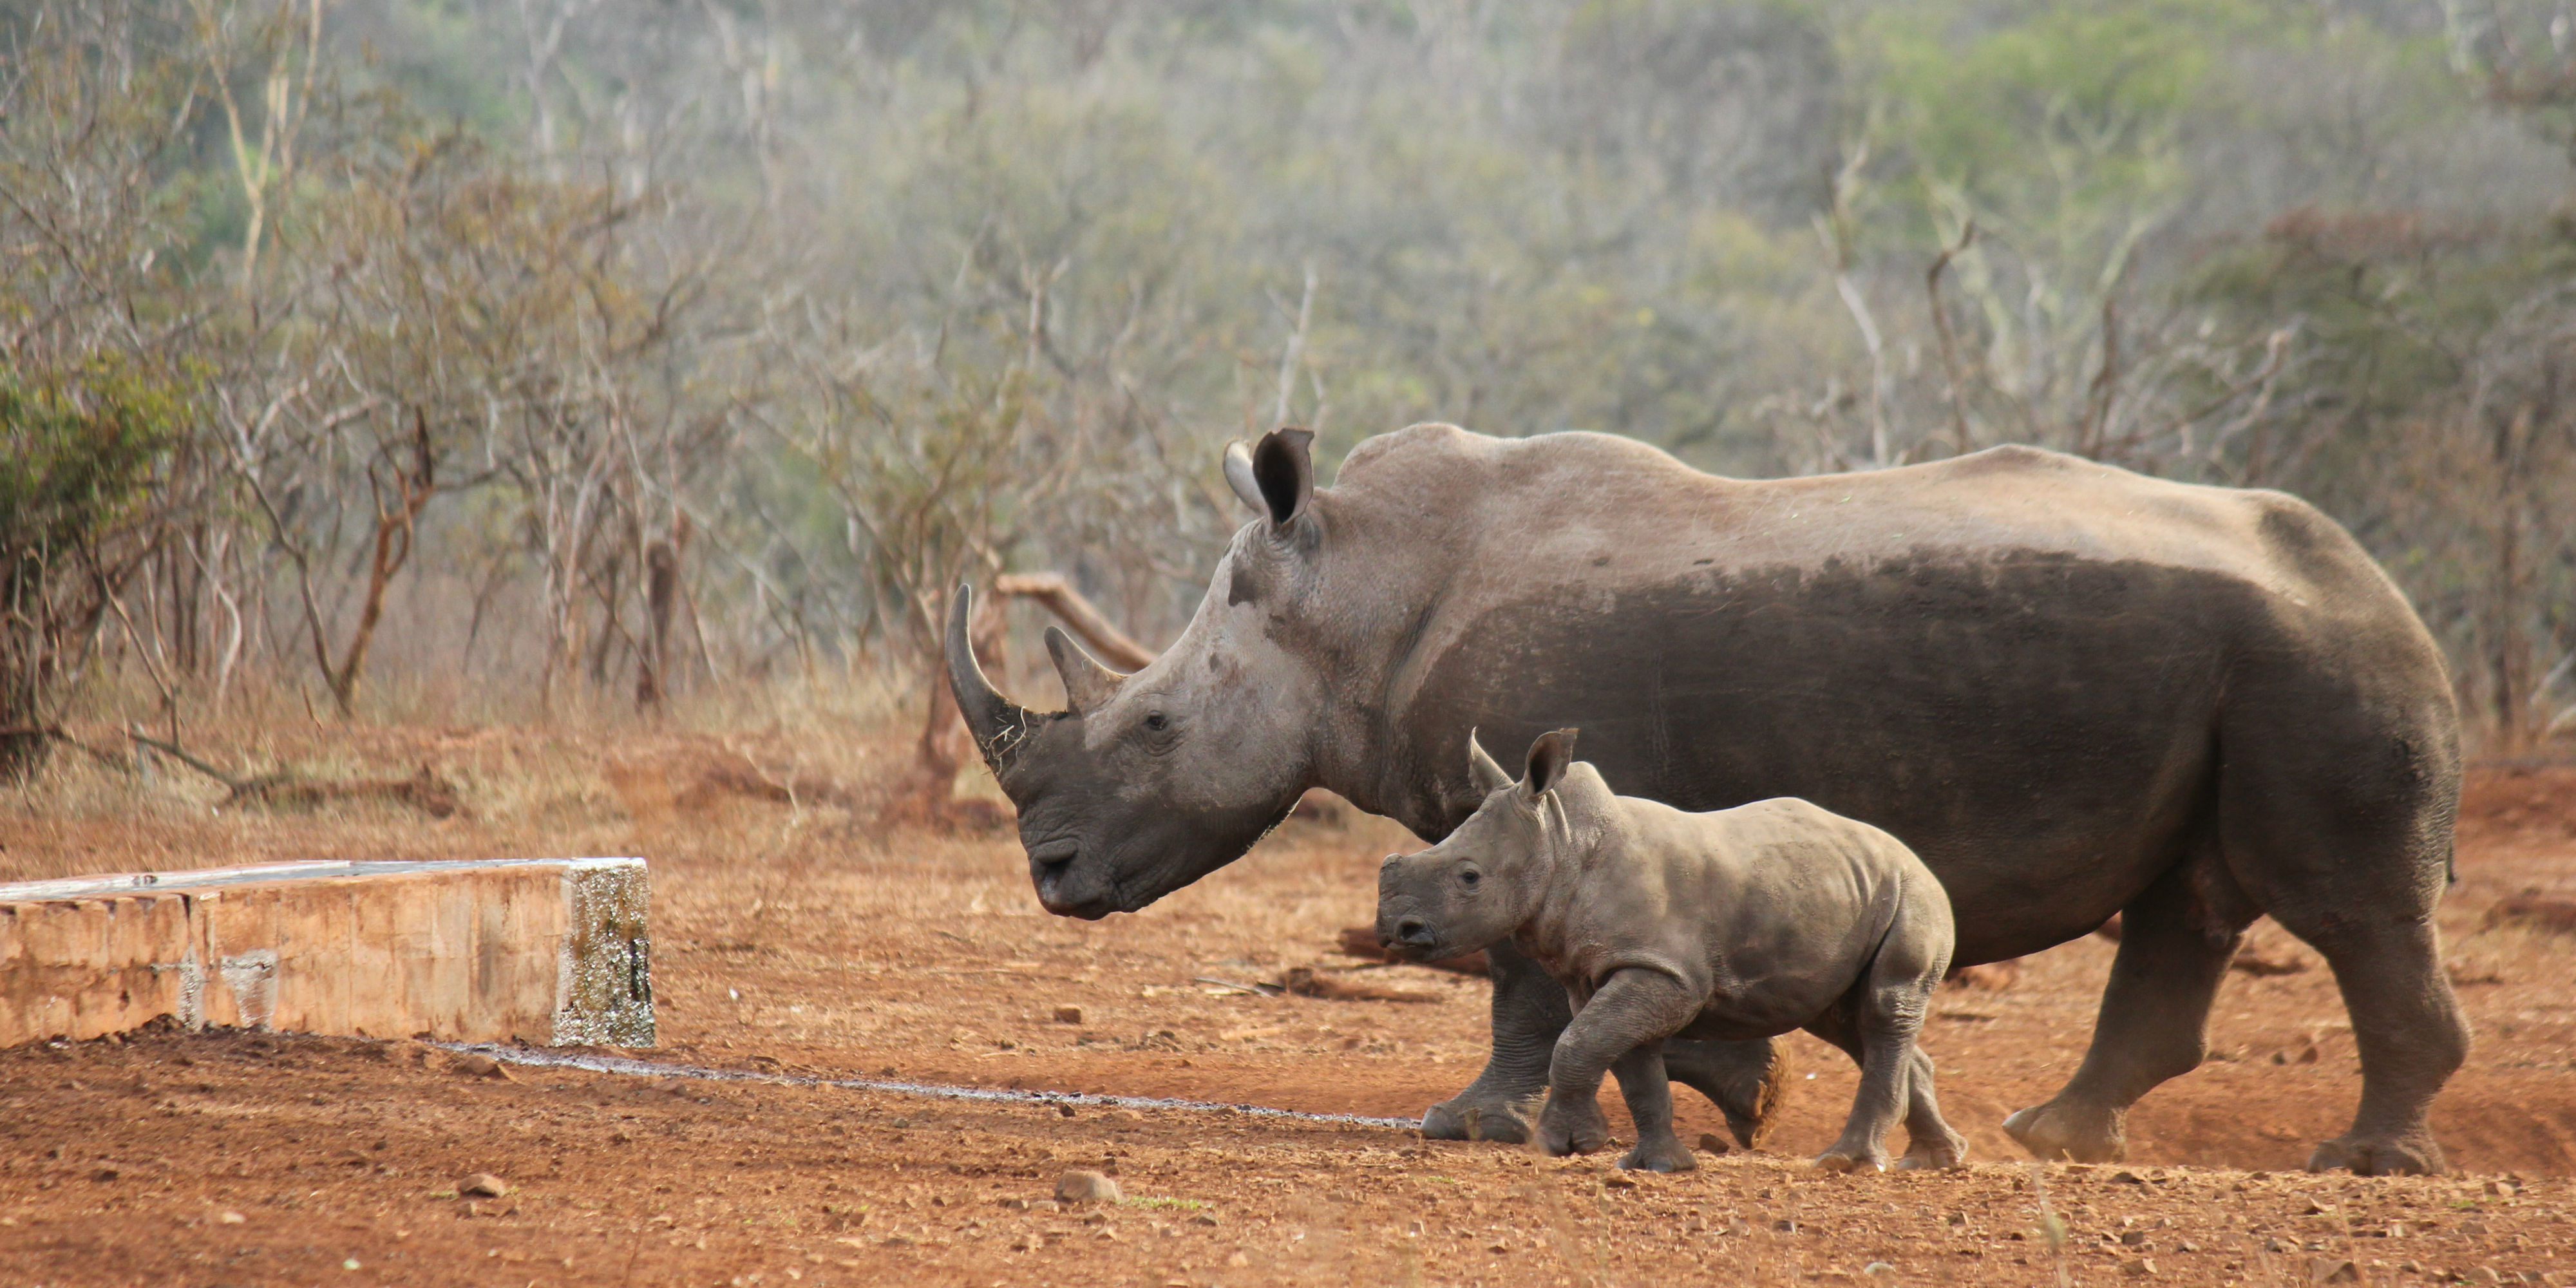 Join a volunteer program towards rhino conservation efforts.